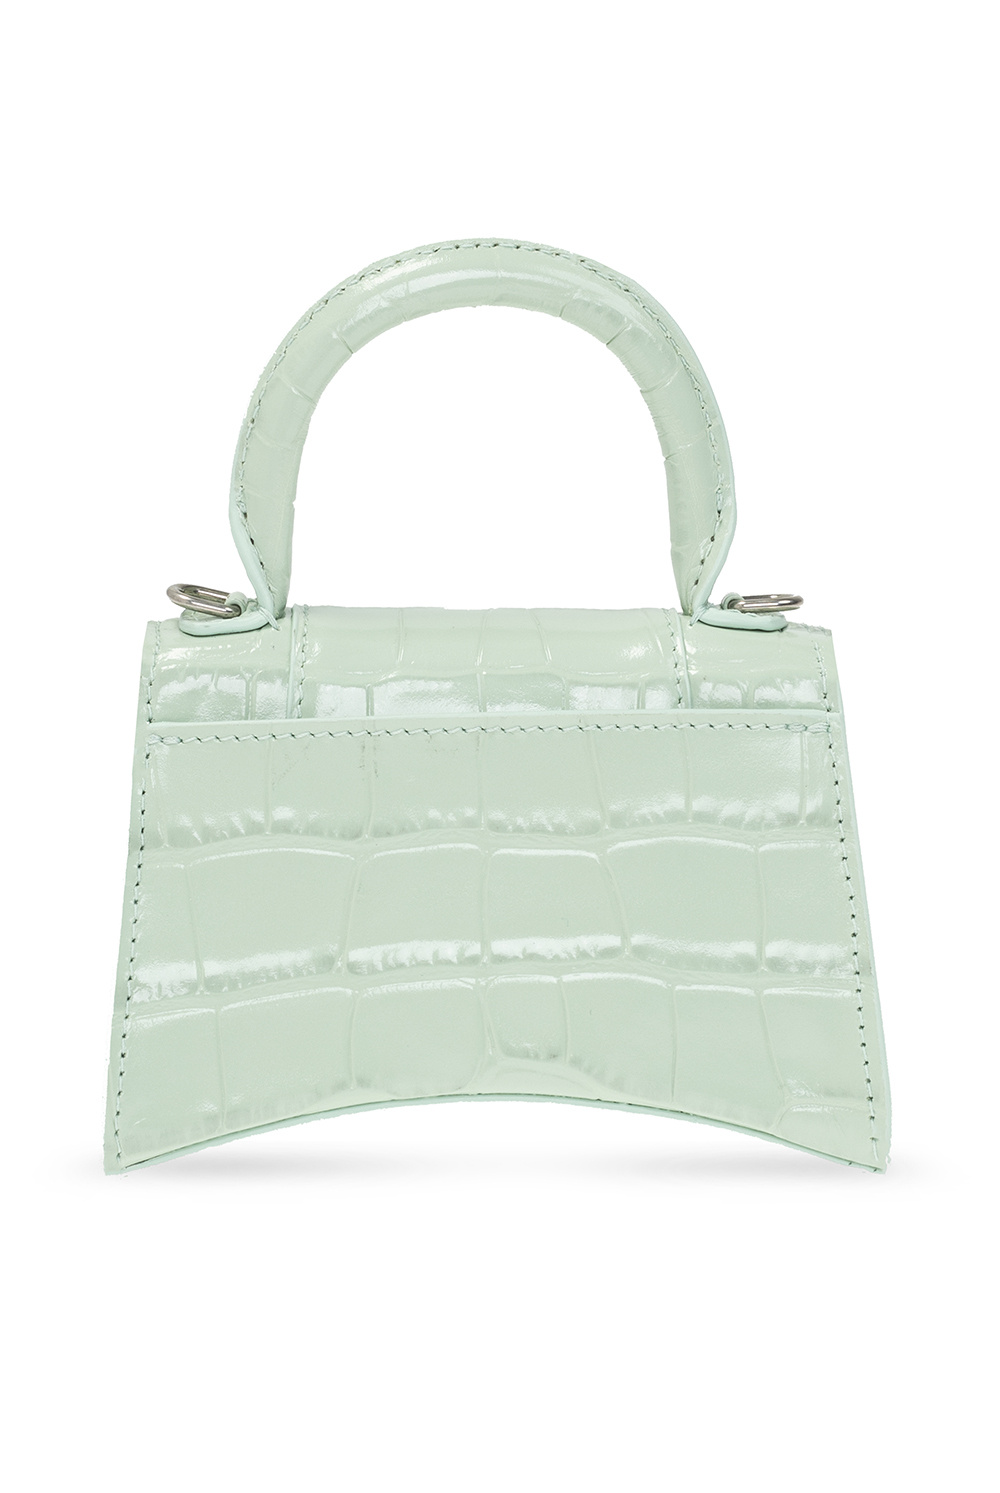 Balenciaga ‘Hourglass Mini’ shoulder Prada bag